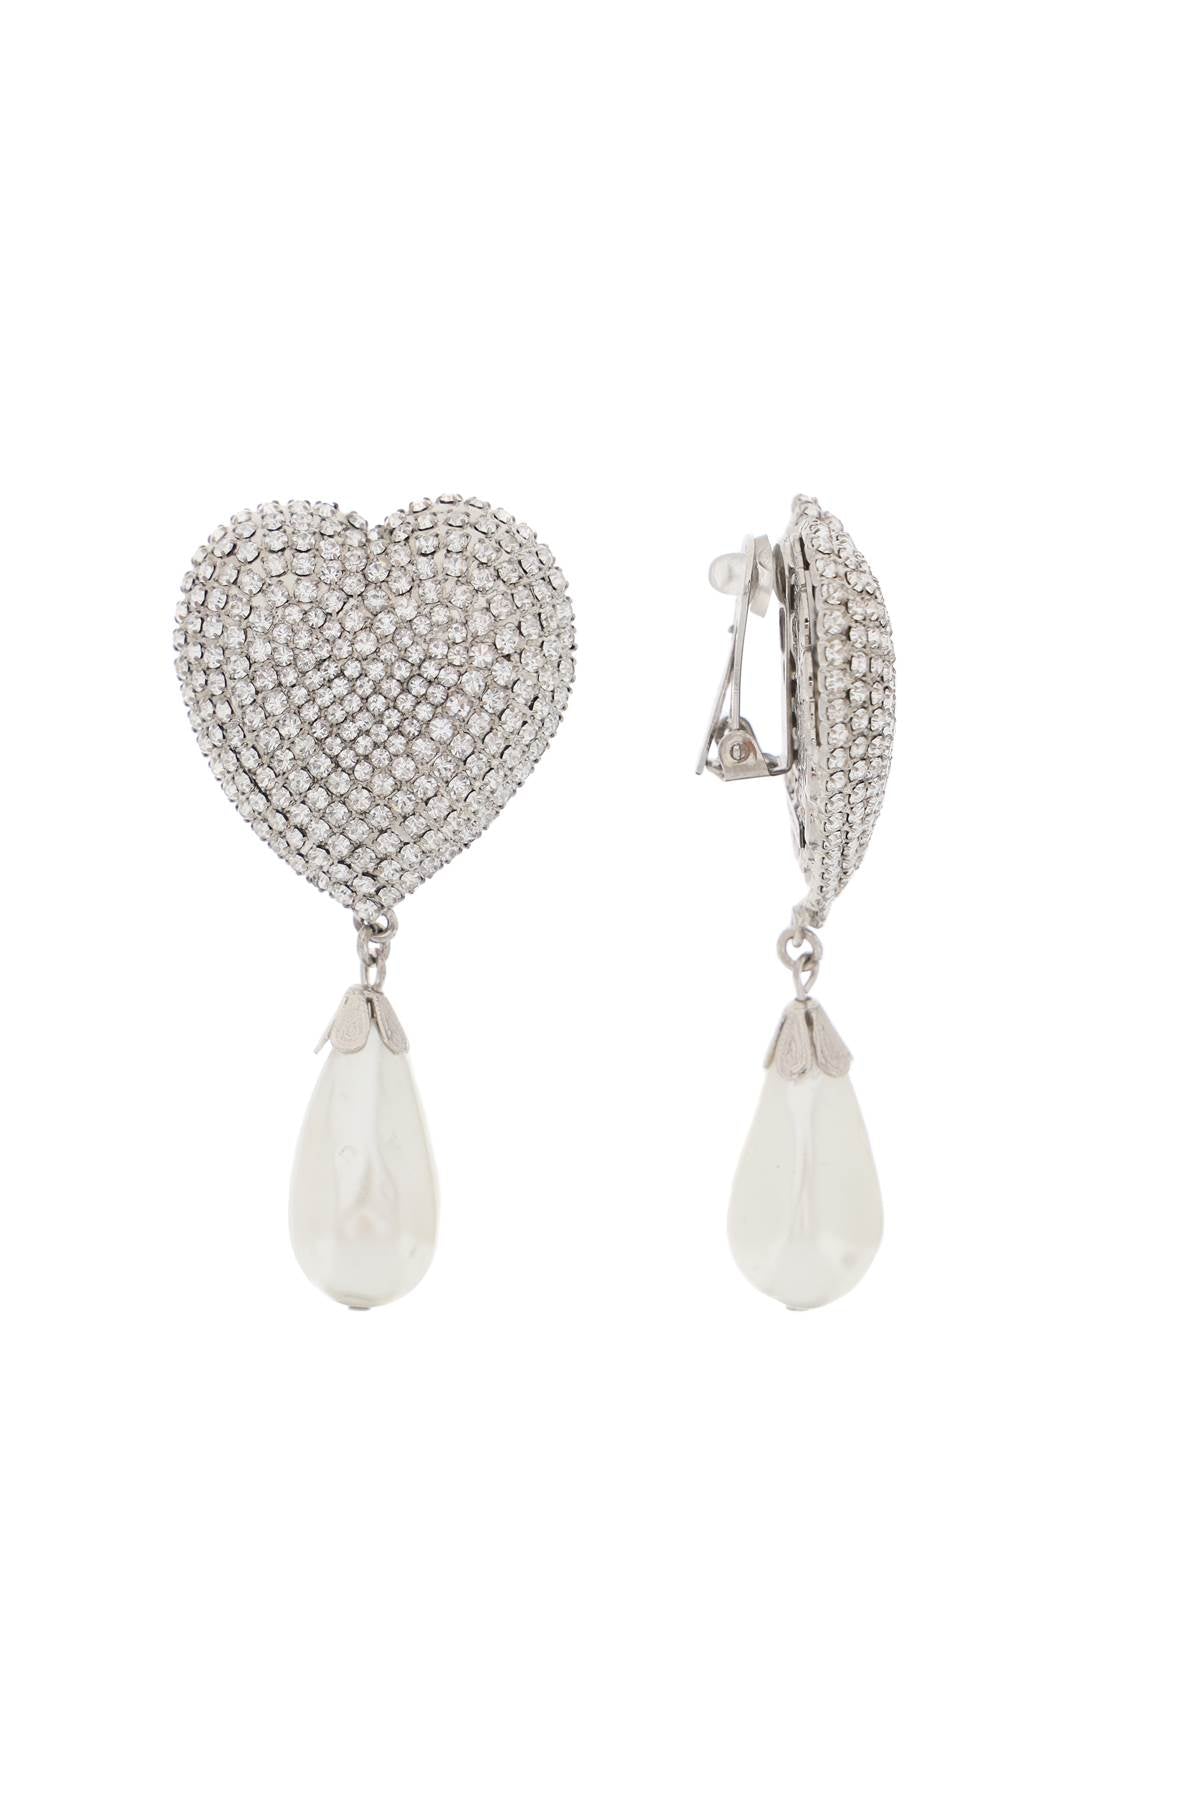 Alessandra rich heart crystal earrings with pearls-women > accessories > jewellery > earrings-Alessandra Rich-os-Silver-Urbanheer